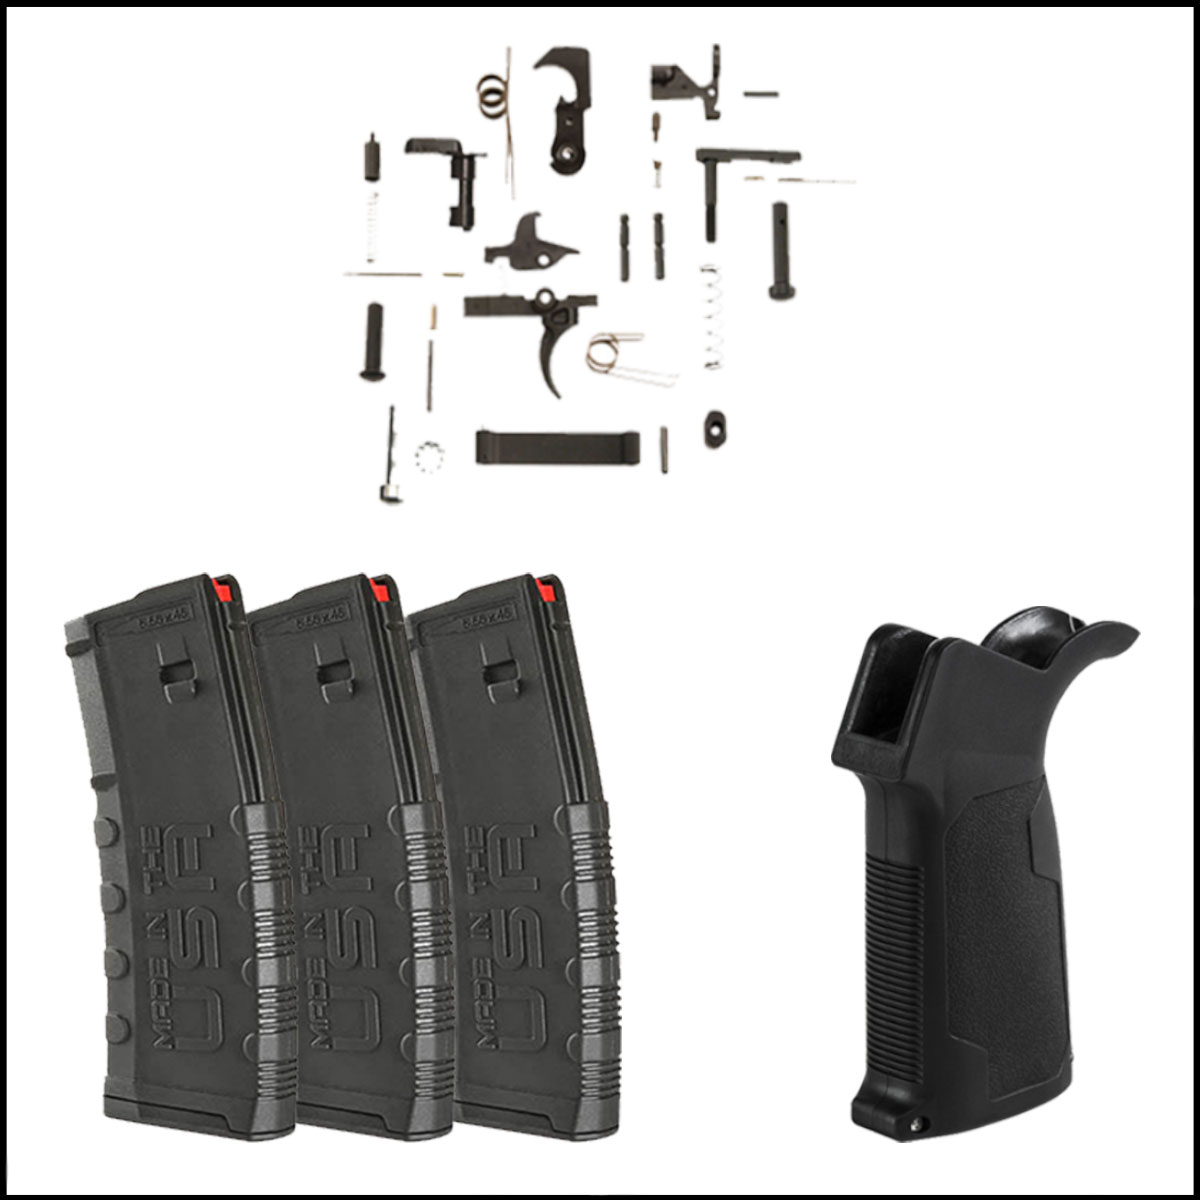 Stocking Stuffer Lower Starting Kits: Amend2 AR-15 30Rd, 3-Pack + Recoil Technologies AR-15 Lower Parts Kit + VISM AR-15 Pistol Grip W/ Bottom Storage Compartment